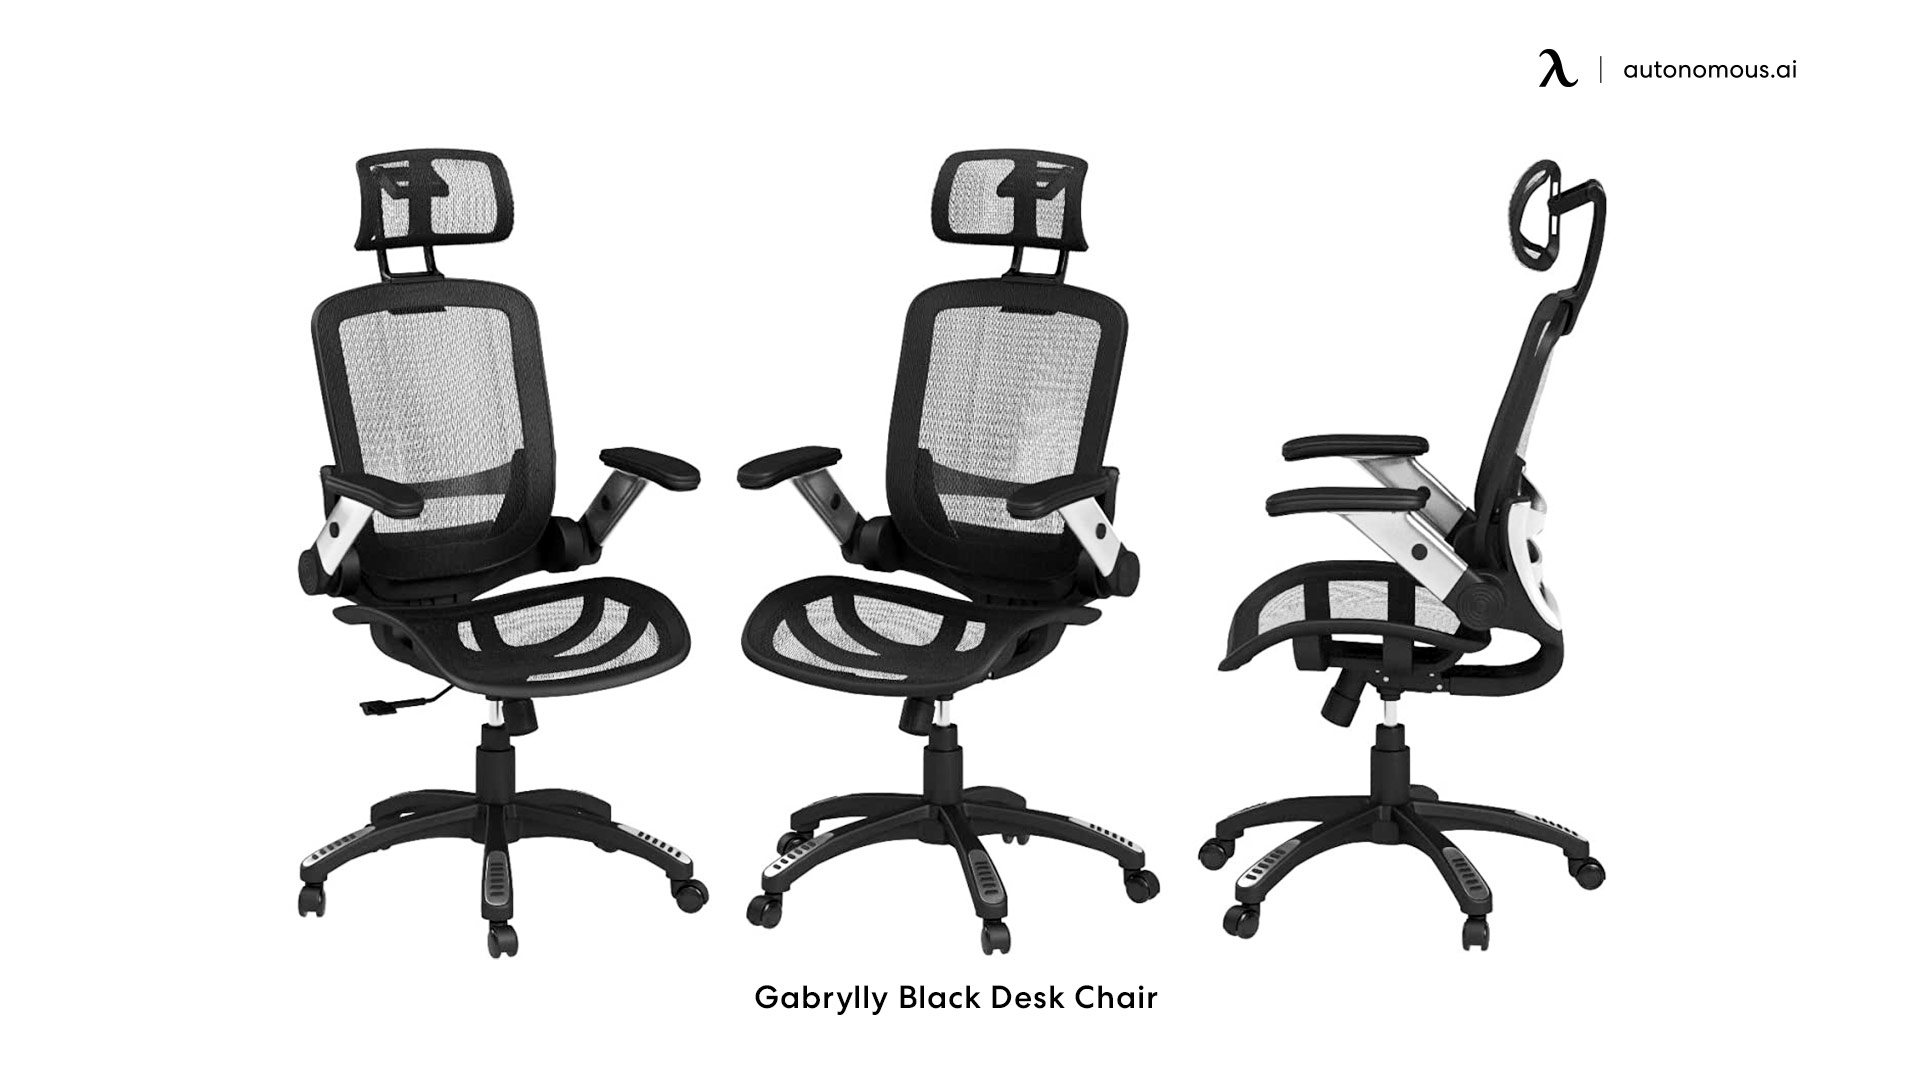 Gabrylly adjustable office chair